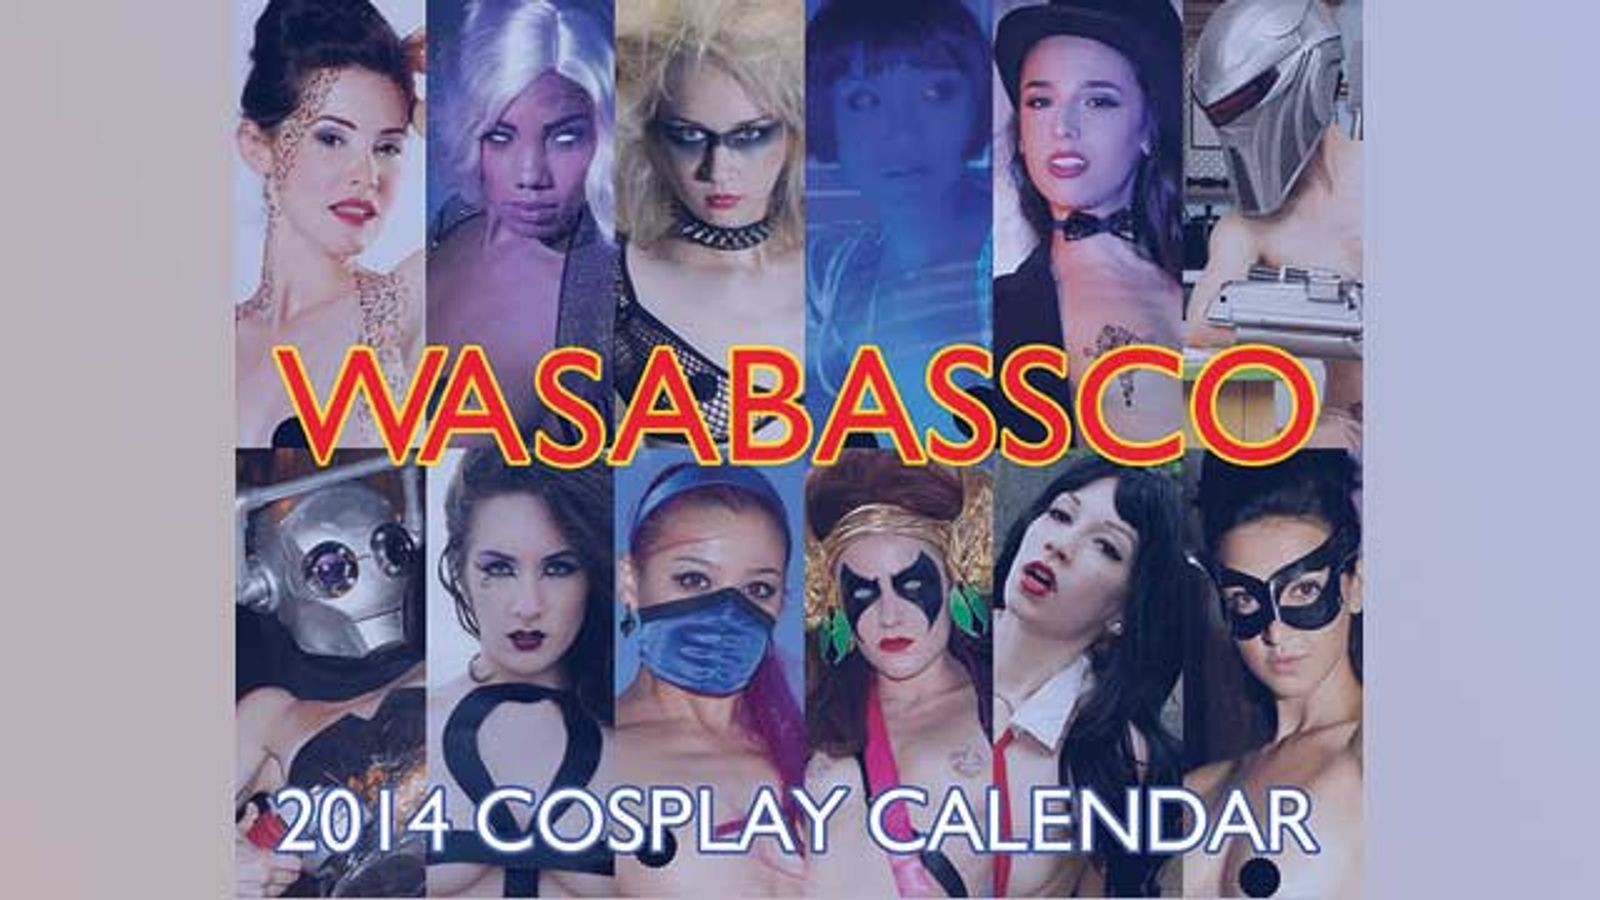 Stagg & Wasabassco Present 2014 Burlesque/Side Show Calendar